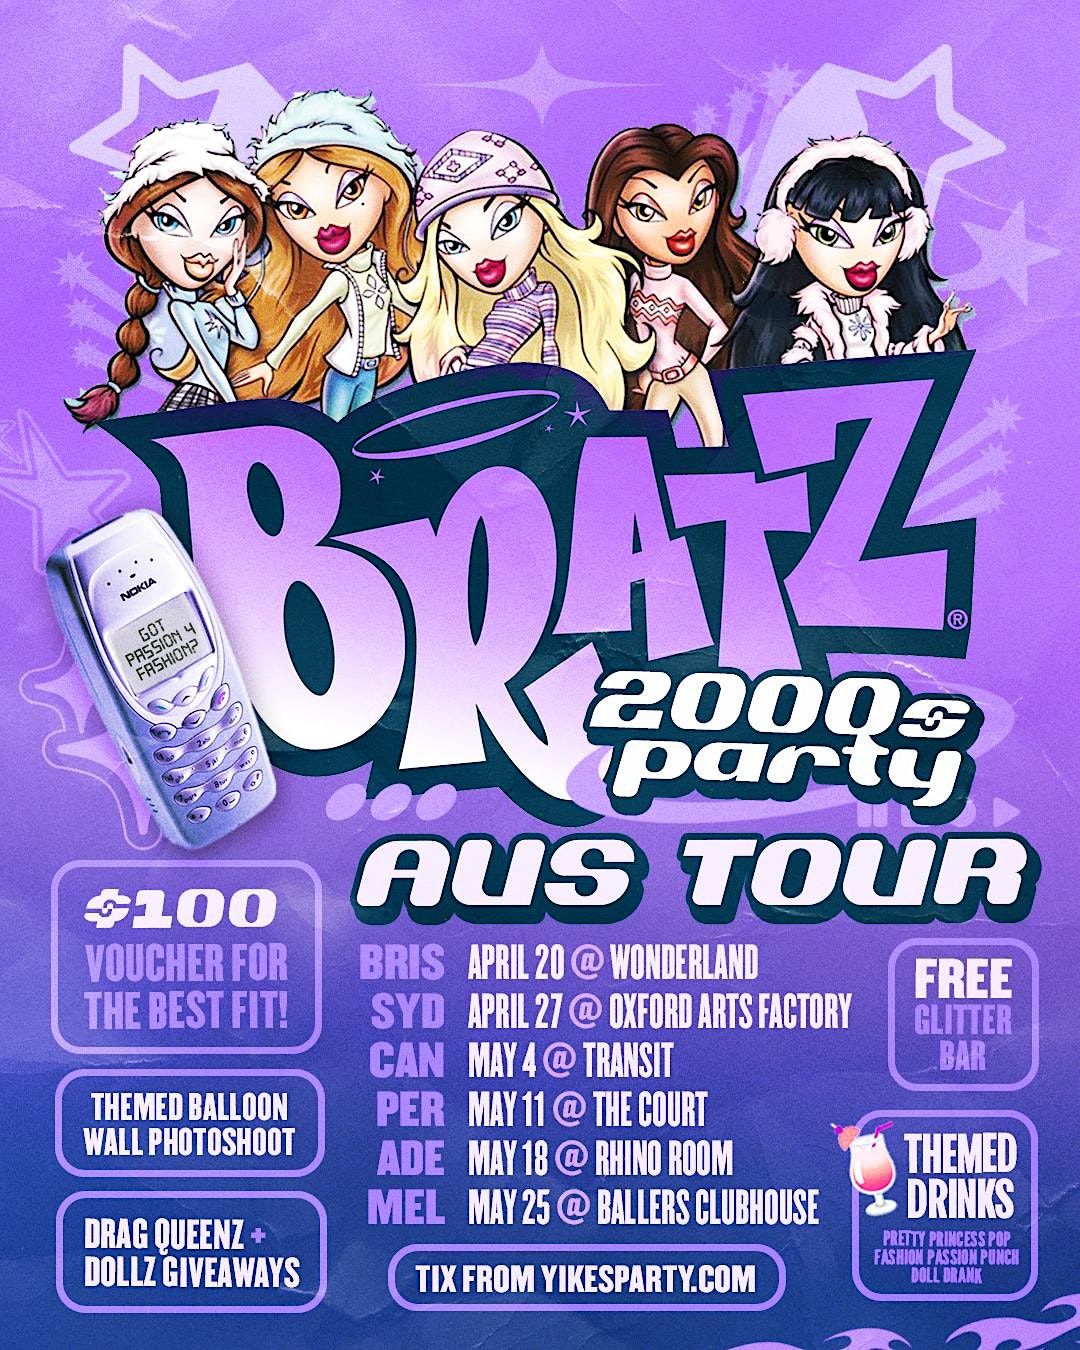 BRATZ 2000s Party Canberra